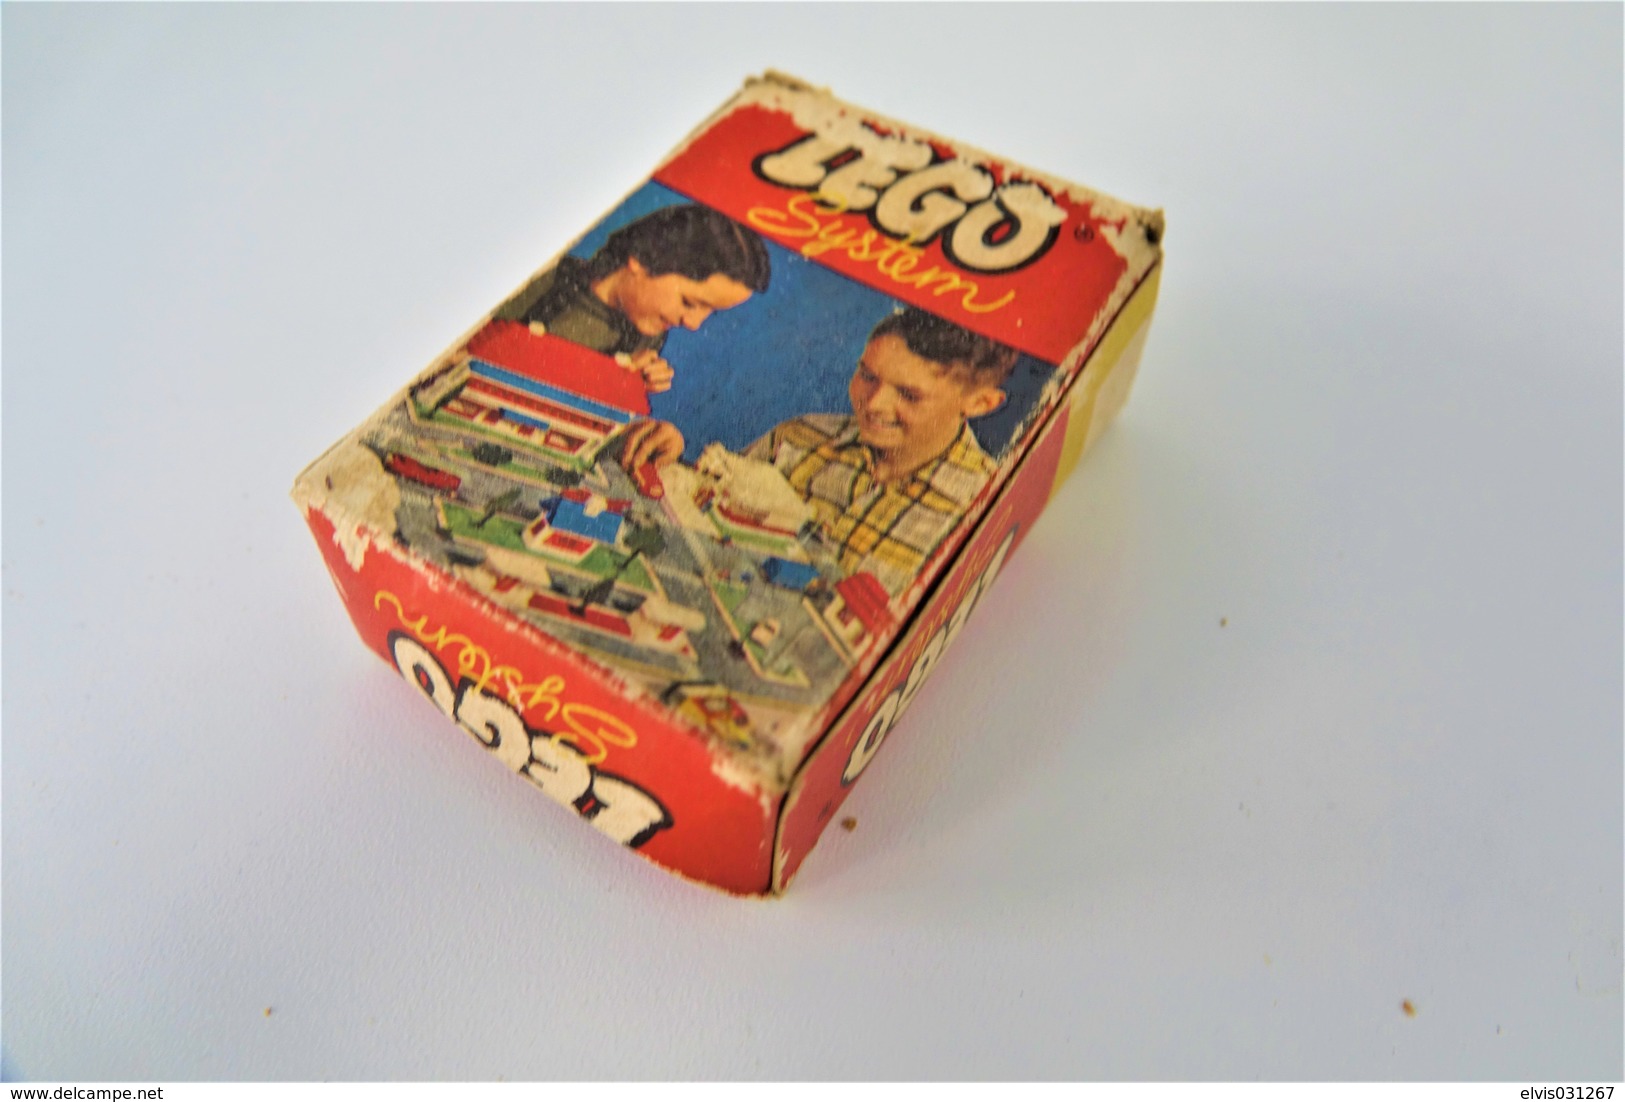 LEGO - 223 System 1 X 1 Round Bricks - Original Lego 1958 - Vintage - Catalogues